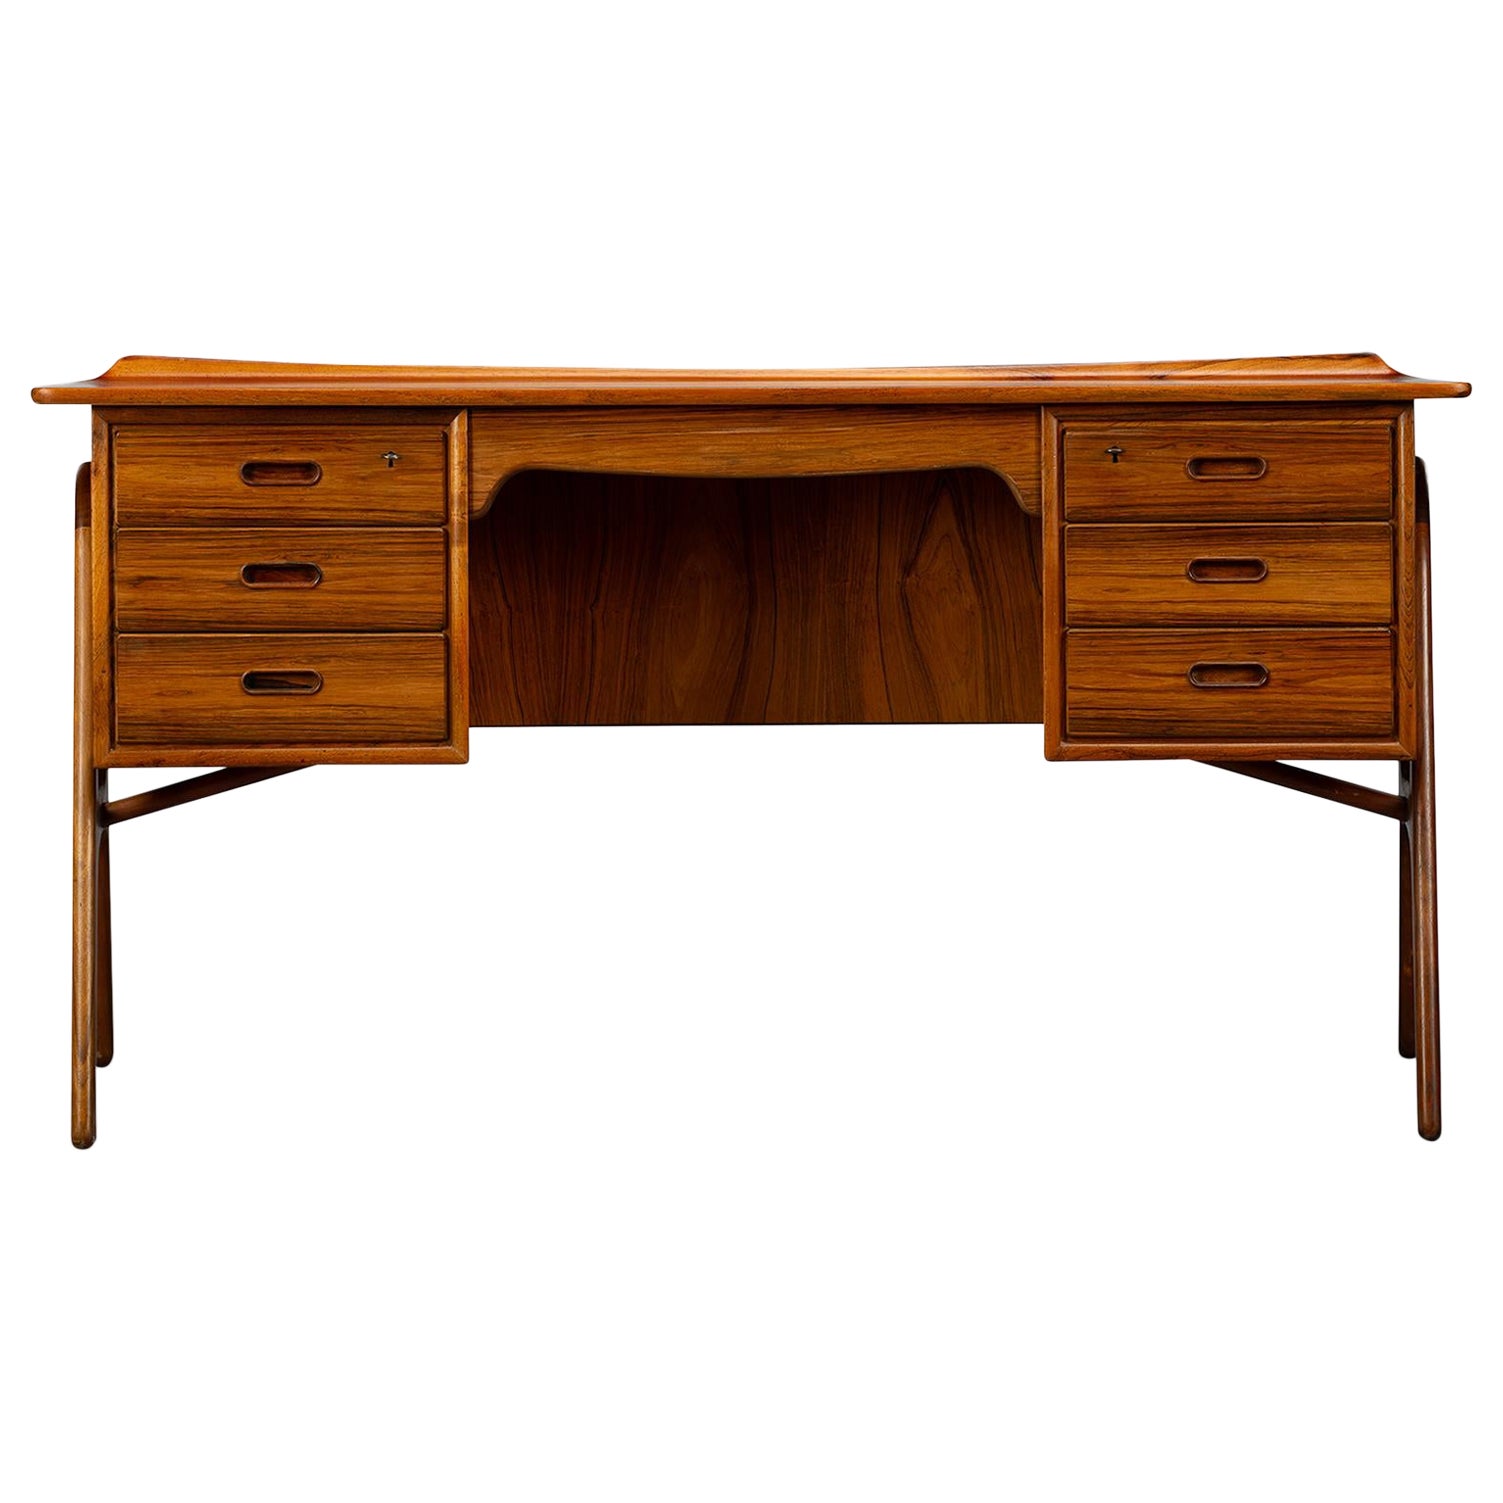 Danish Midcentury Modern Rosewood Desk by Svend Age Madsen for HP Hansen, 1960s For Sale